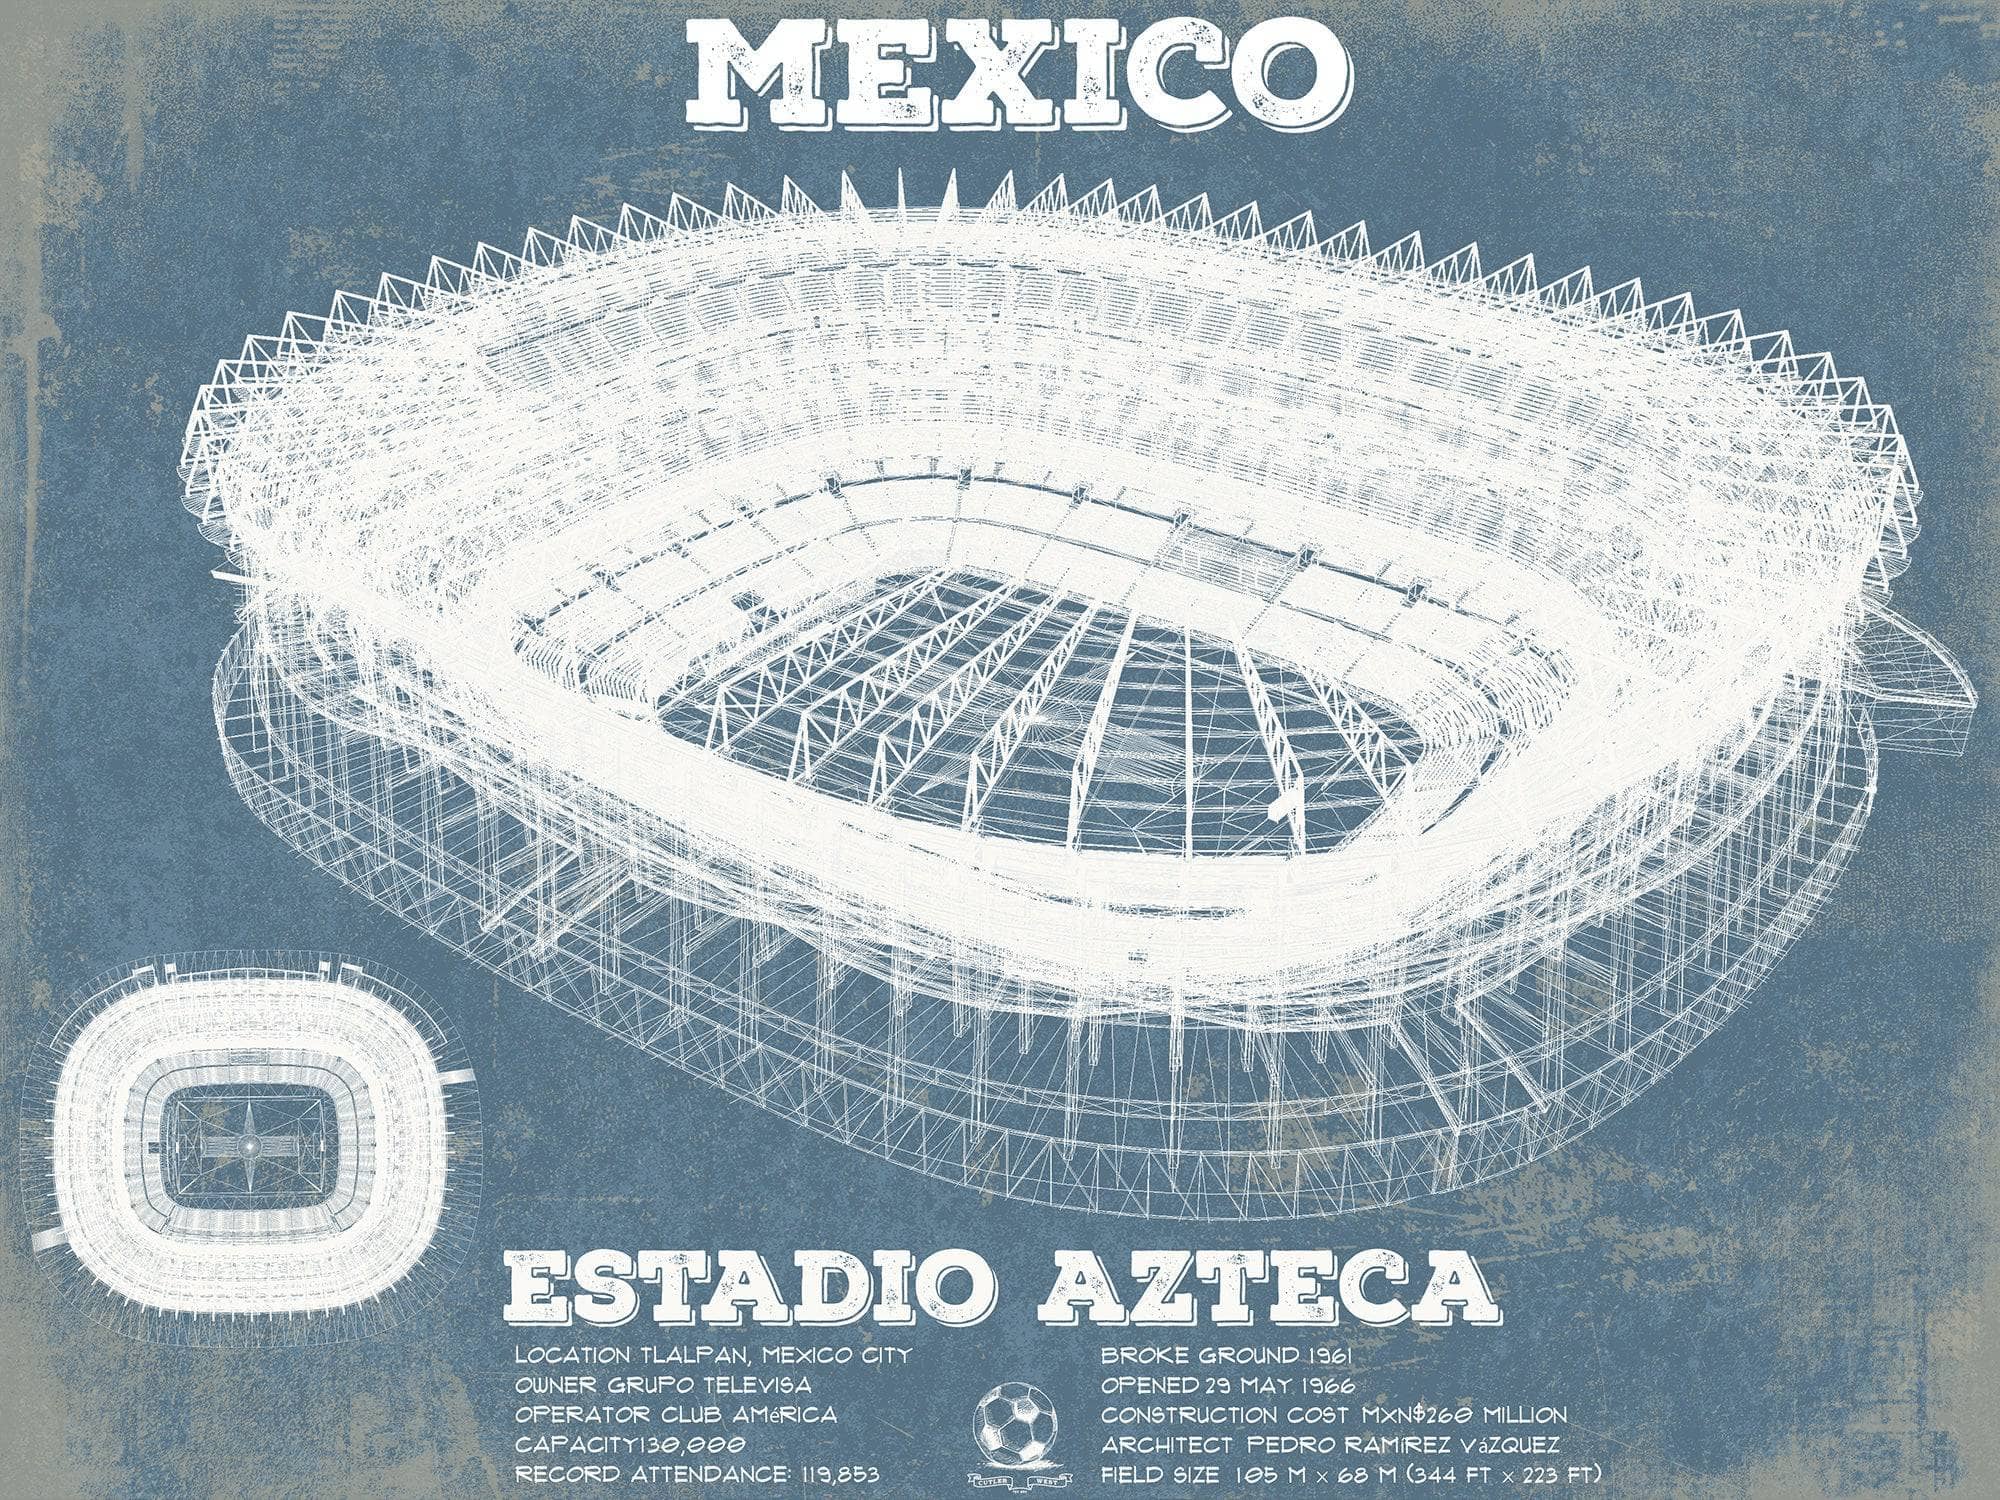 Cutler West Soccer Collection 14" x 11" / Unframed Mexico Football - Vintage Estadio Azteca Stadium Soccer Print 755380905_74187